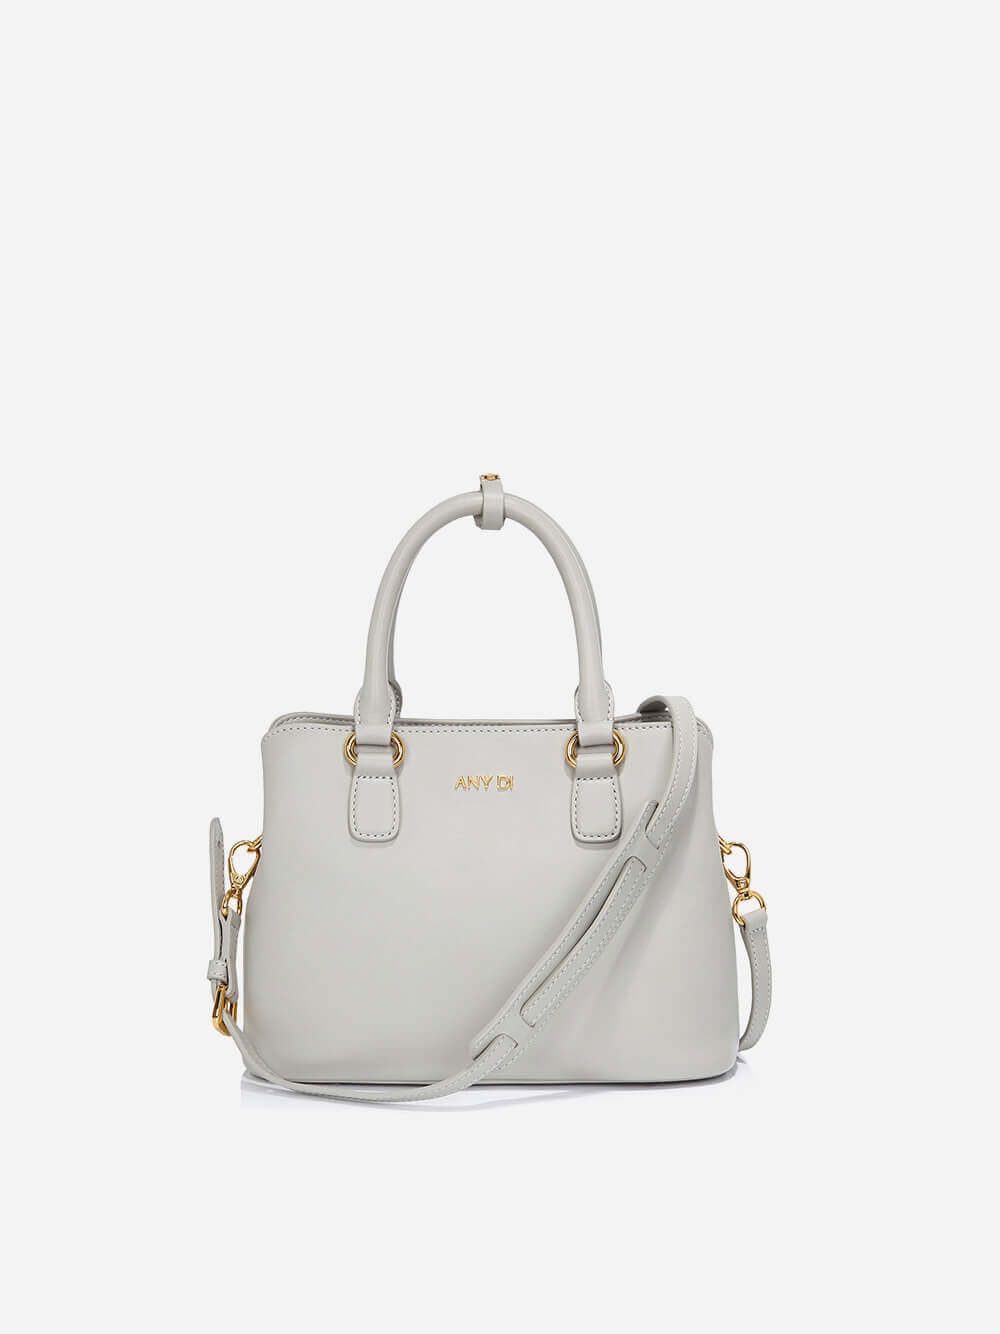 XM Light Grey Bag | Any Di